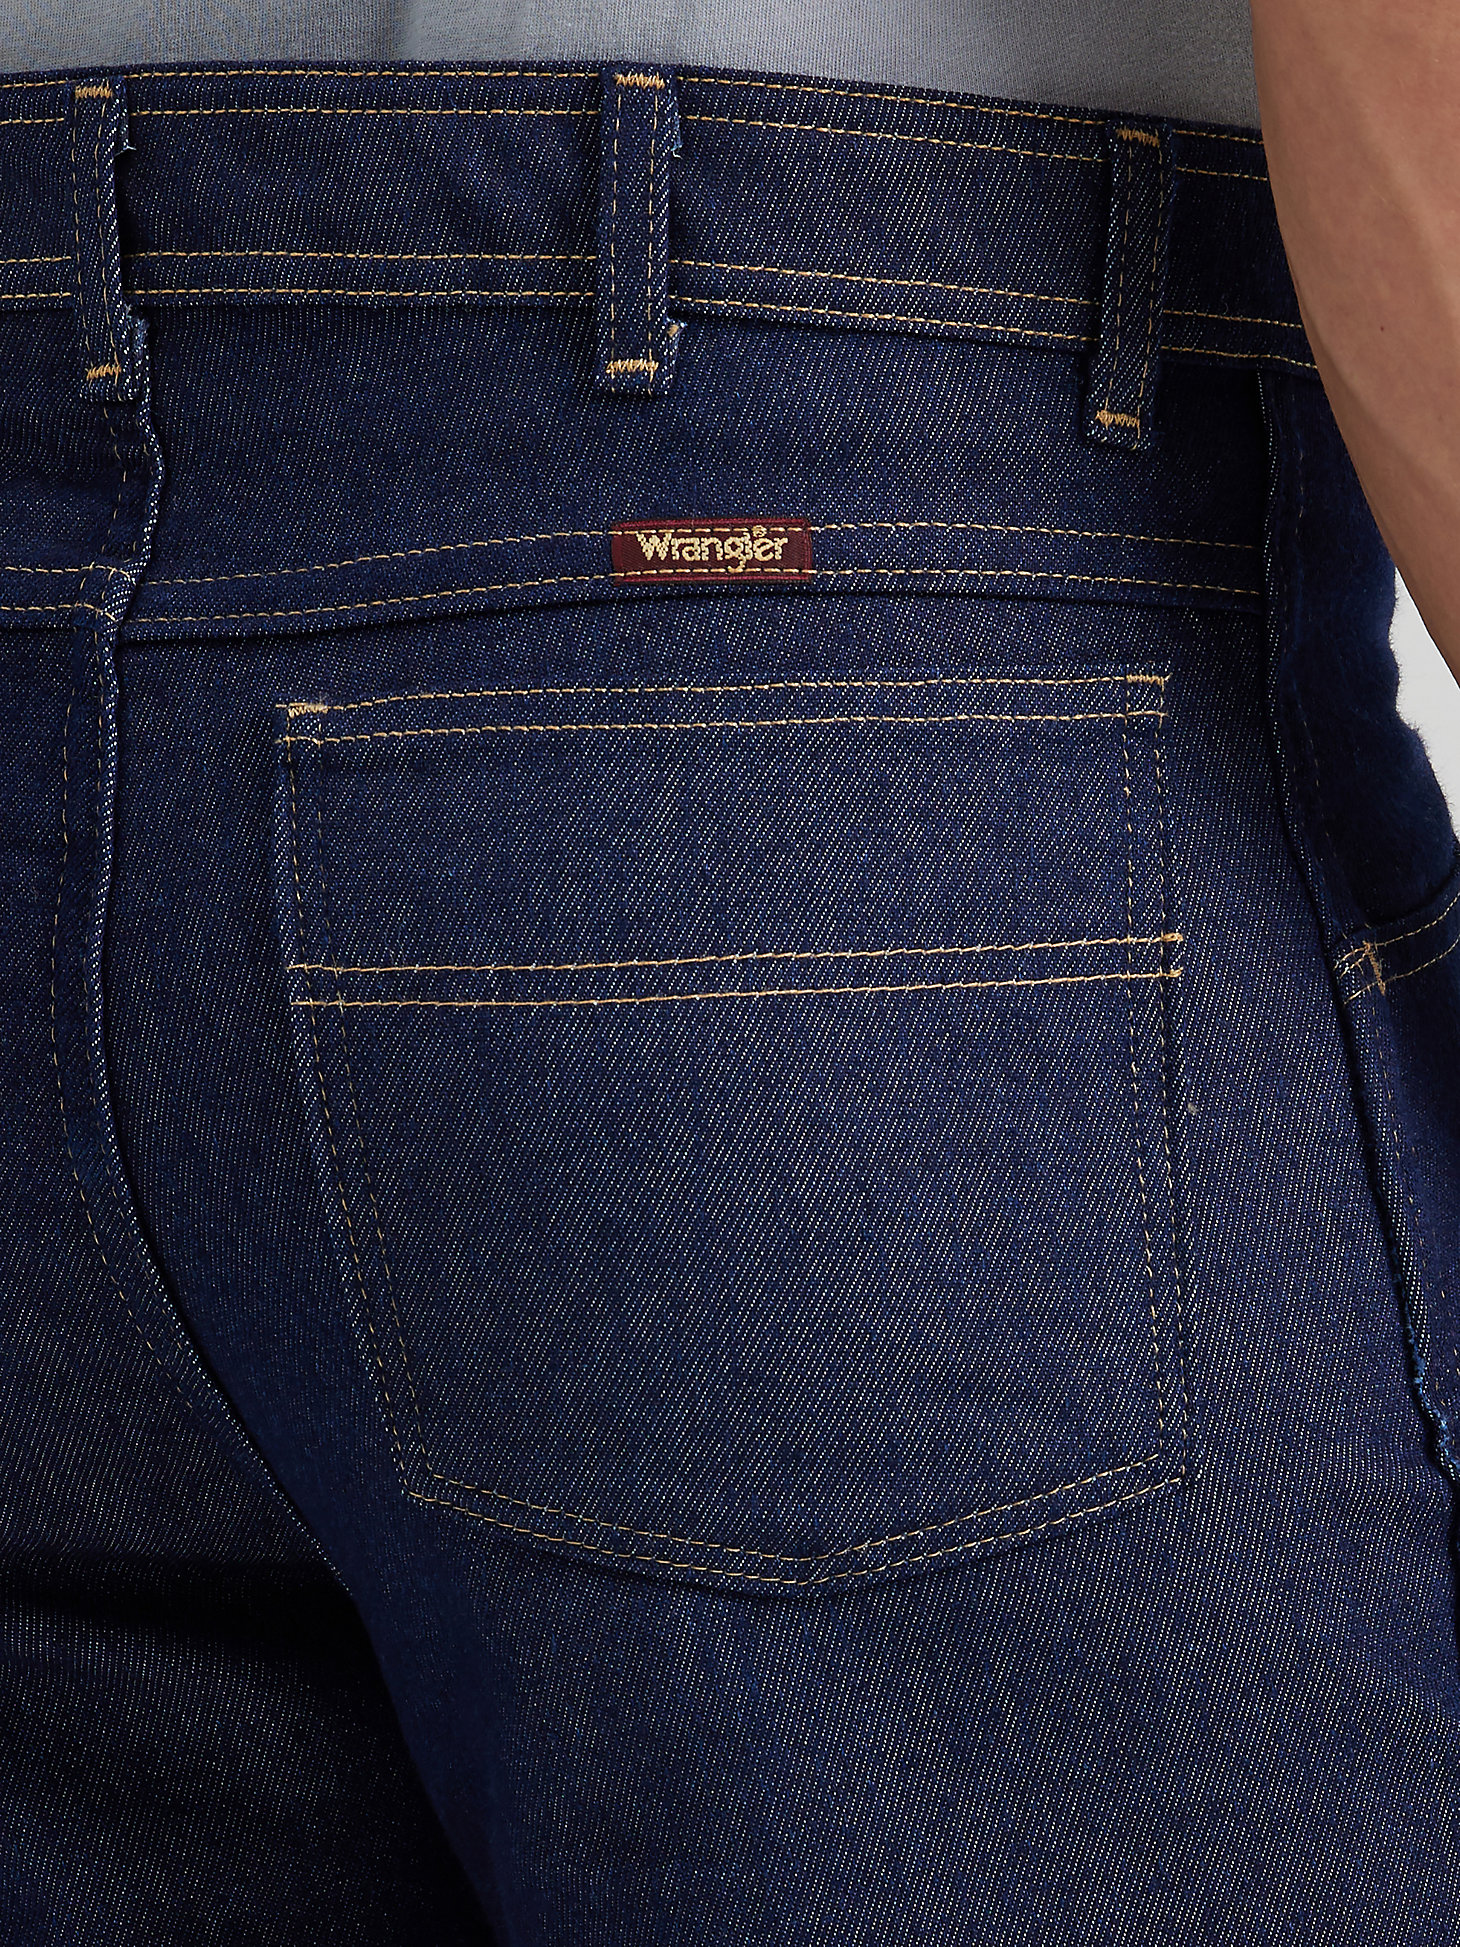 Wrangler® Men's Five Star Premium Regular Flex Fit Jean in Dark Indigo alternative view 2